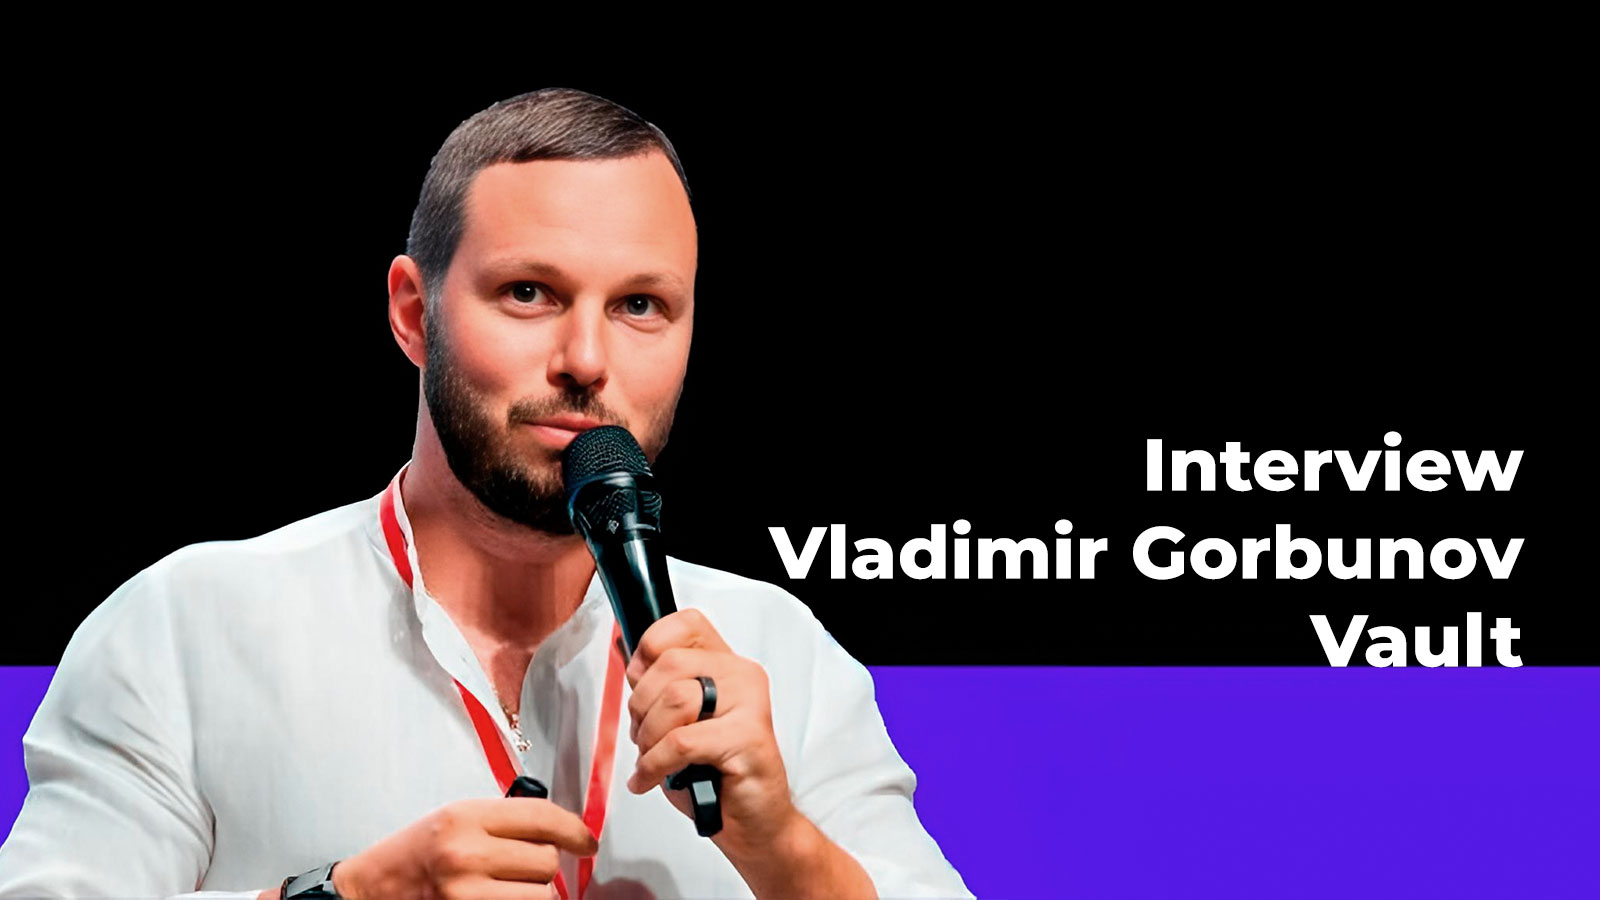 $50 Billion Market, $60 Million Yearly Contract Revenue: Story of Vault's Leadership Through Eyes of Its Founder, Vladimir Gorbunov